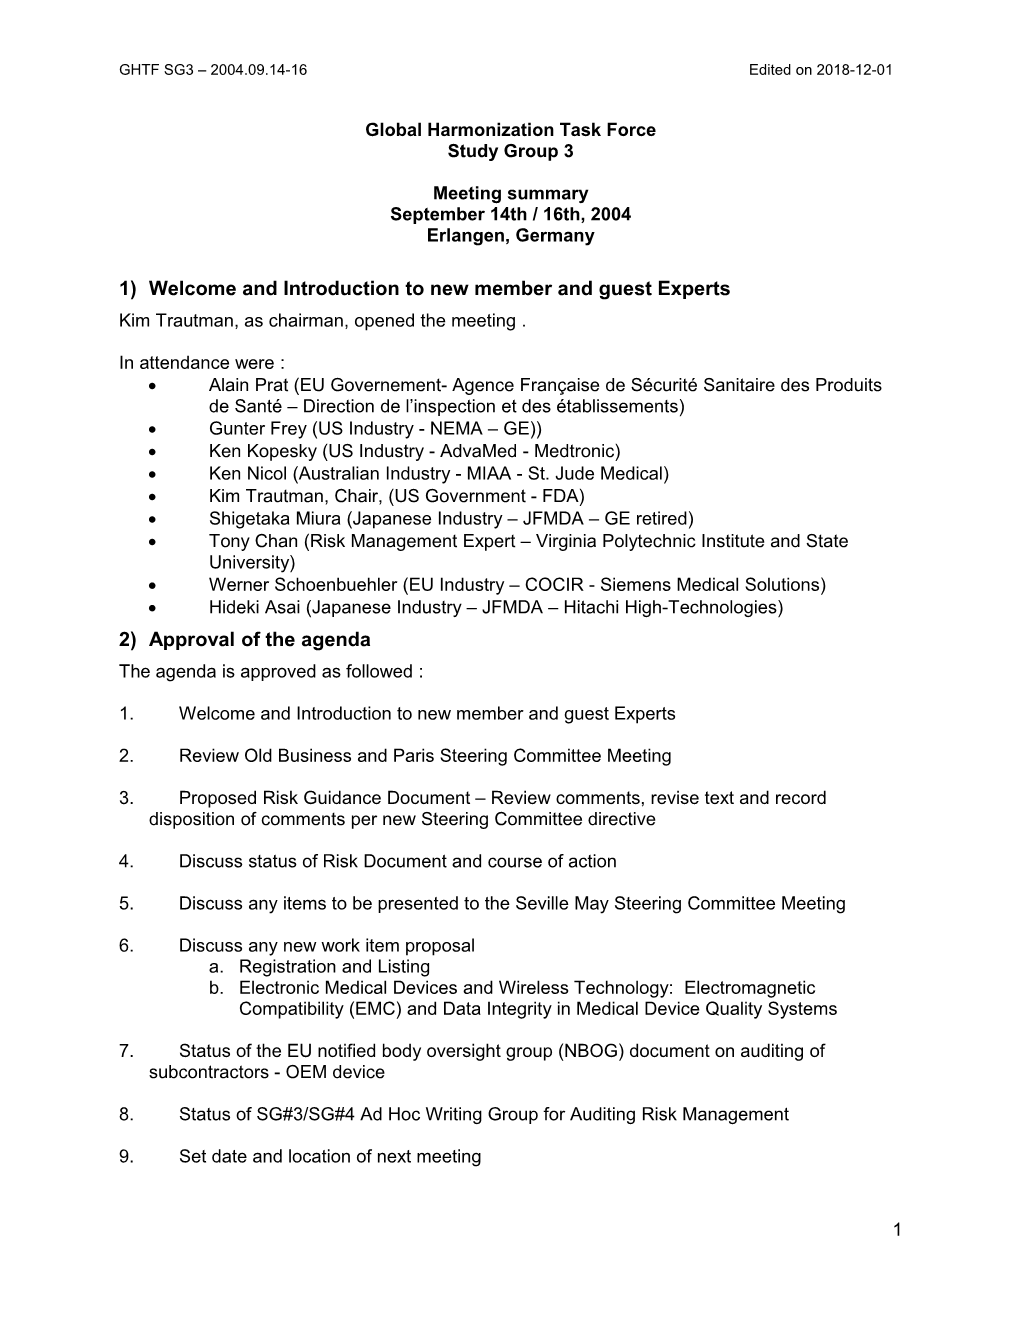 GHTF SG3 Meeting Minutes - September 2004